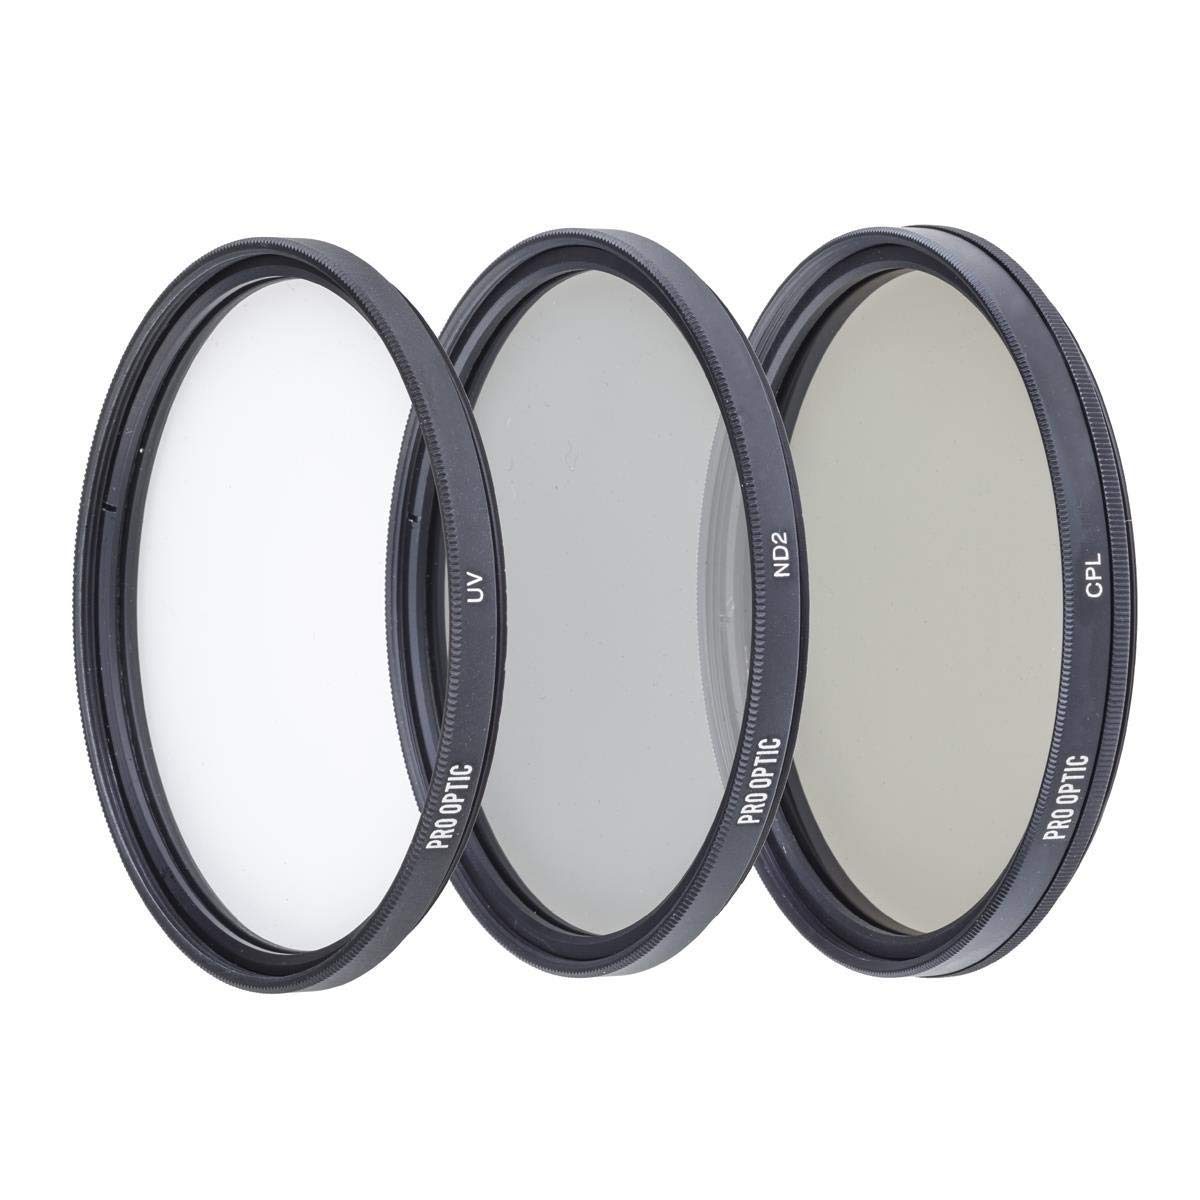 Sony ZV-E10 Mirrorless Camera with 16-50mm Lens, Bundle, SanDisk Extreme PRO 64GB, Multi-Device Shoulder Bag, 40.5mm Digital Essentials Filter Kit (4 Items)